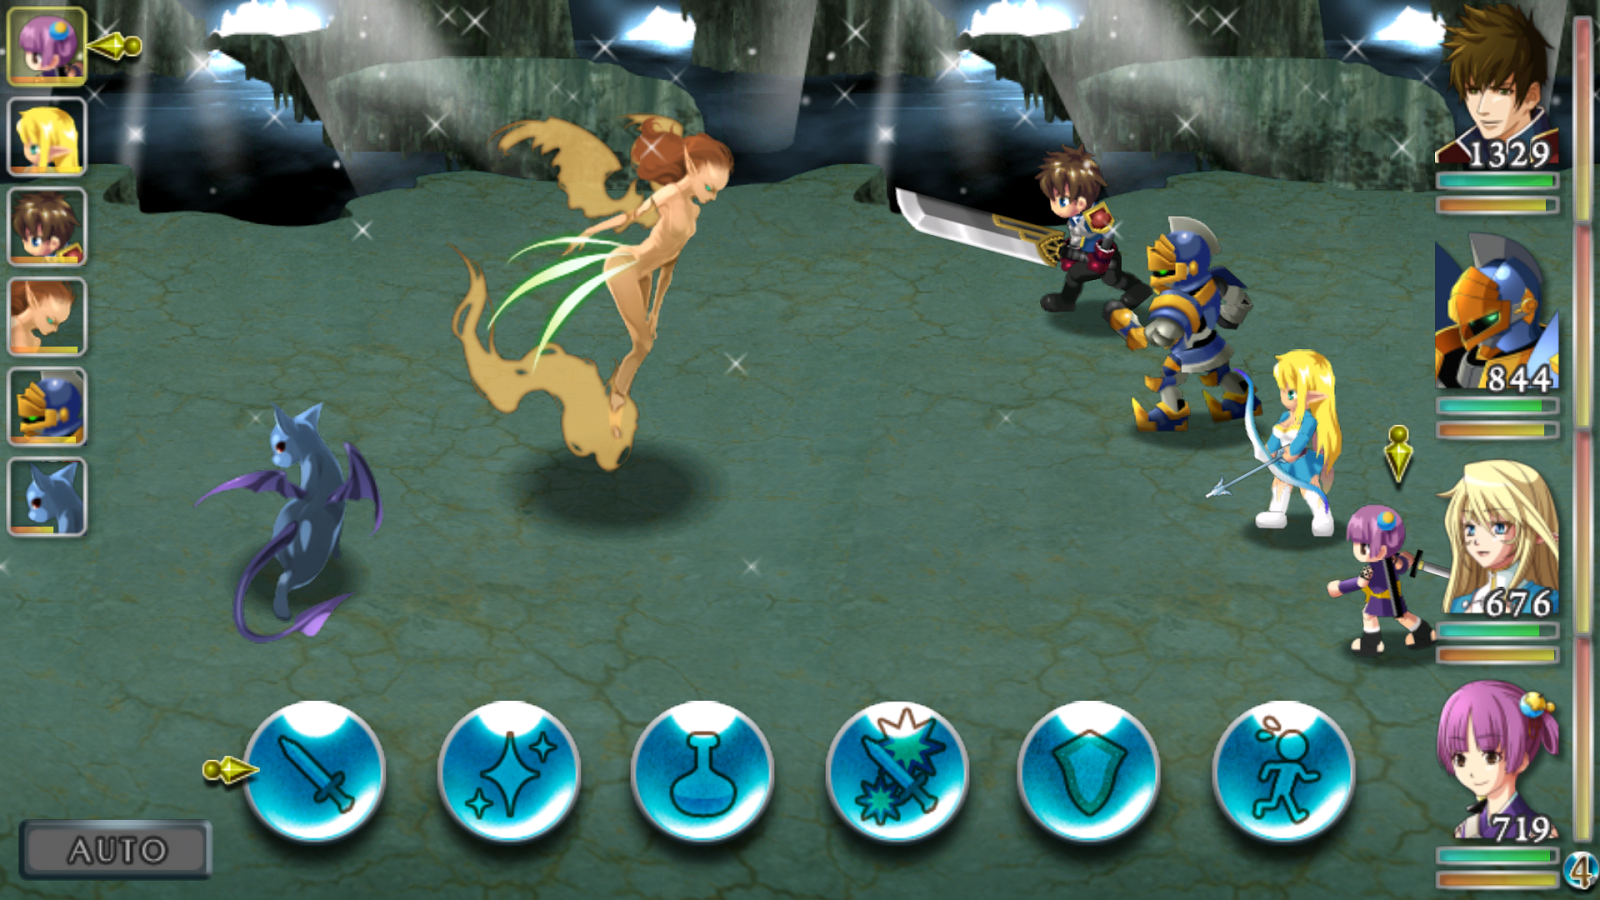    RPG Symphony of the Origin- screenshot  